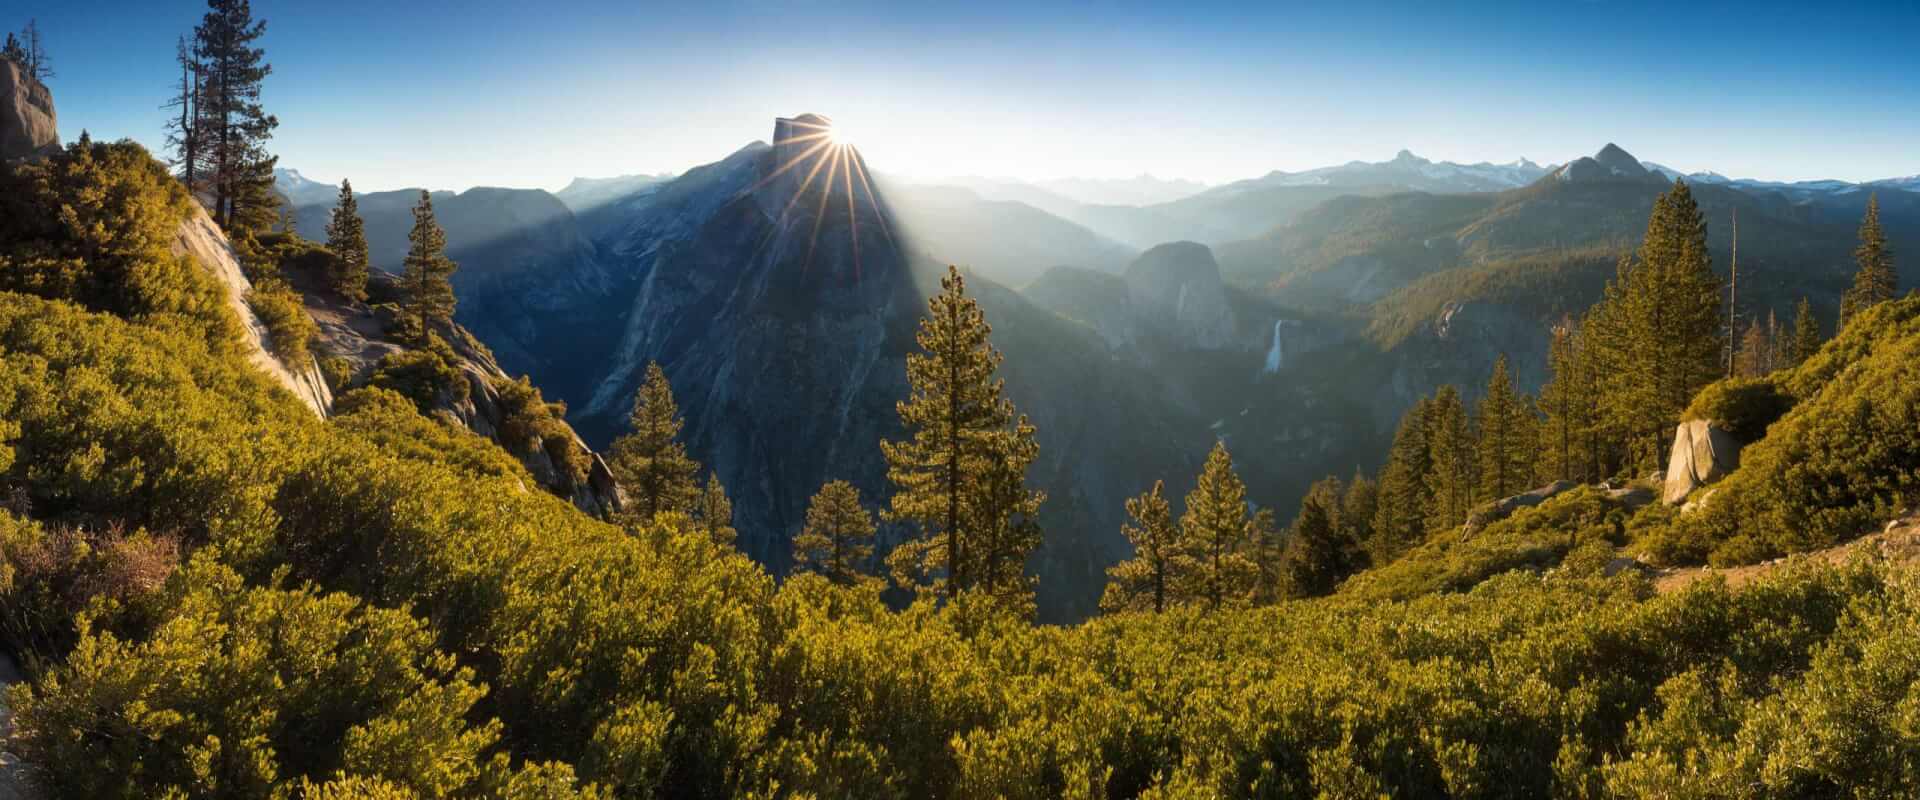 california landscape with wildfire risk report